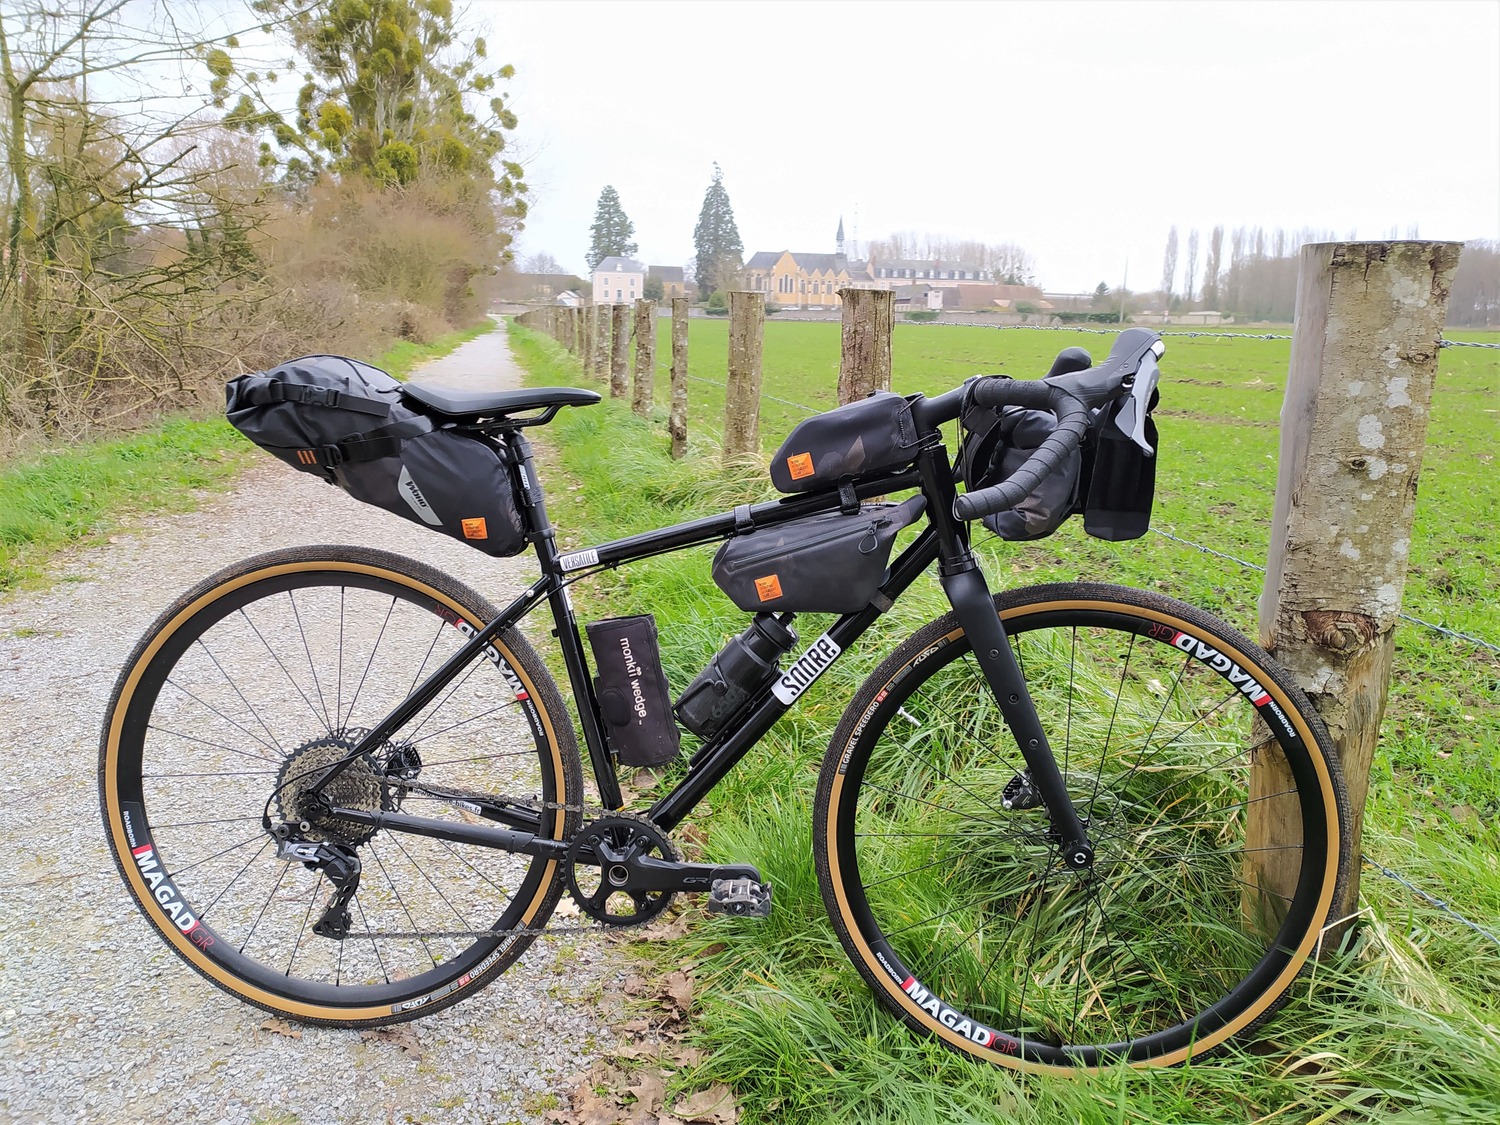 Bagagerie bikepacking WOHO, efficace et ultralight - Bike Café